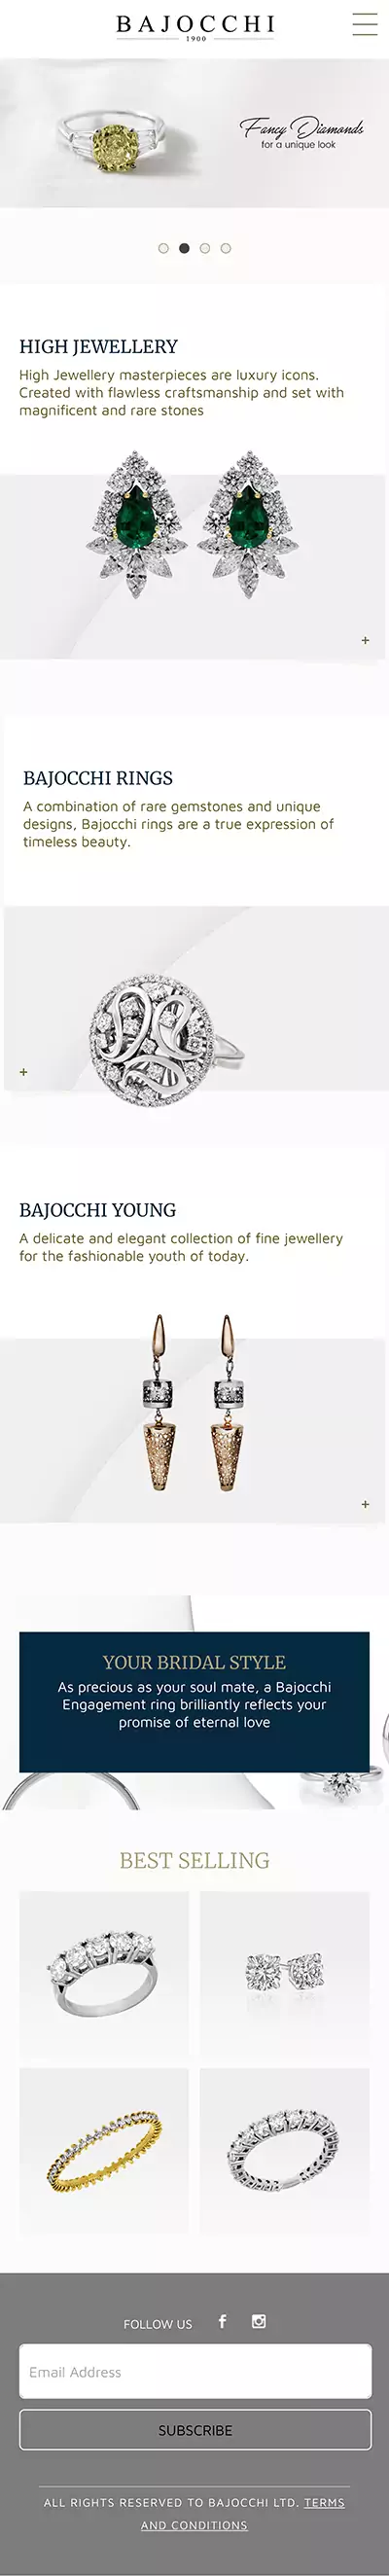 Bajocchi jewellers